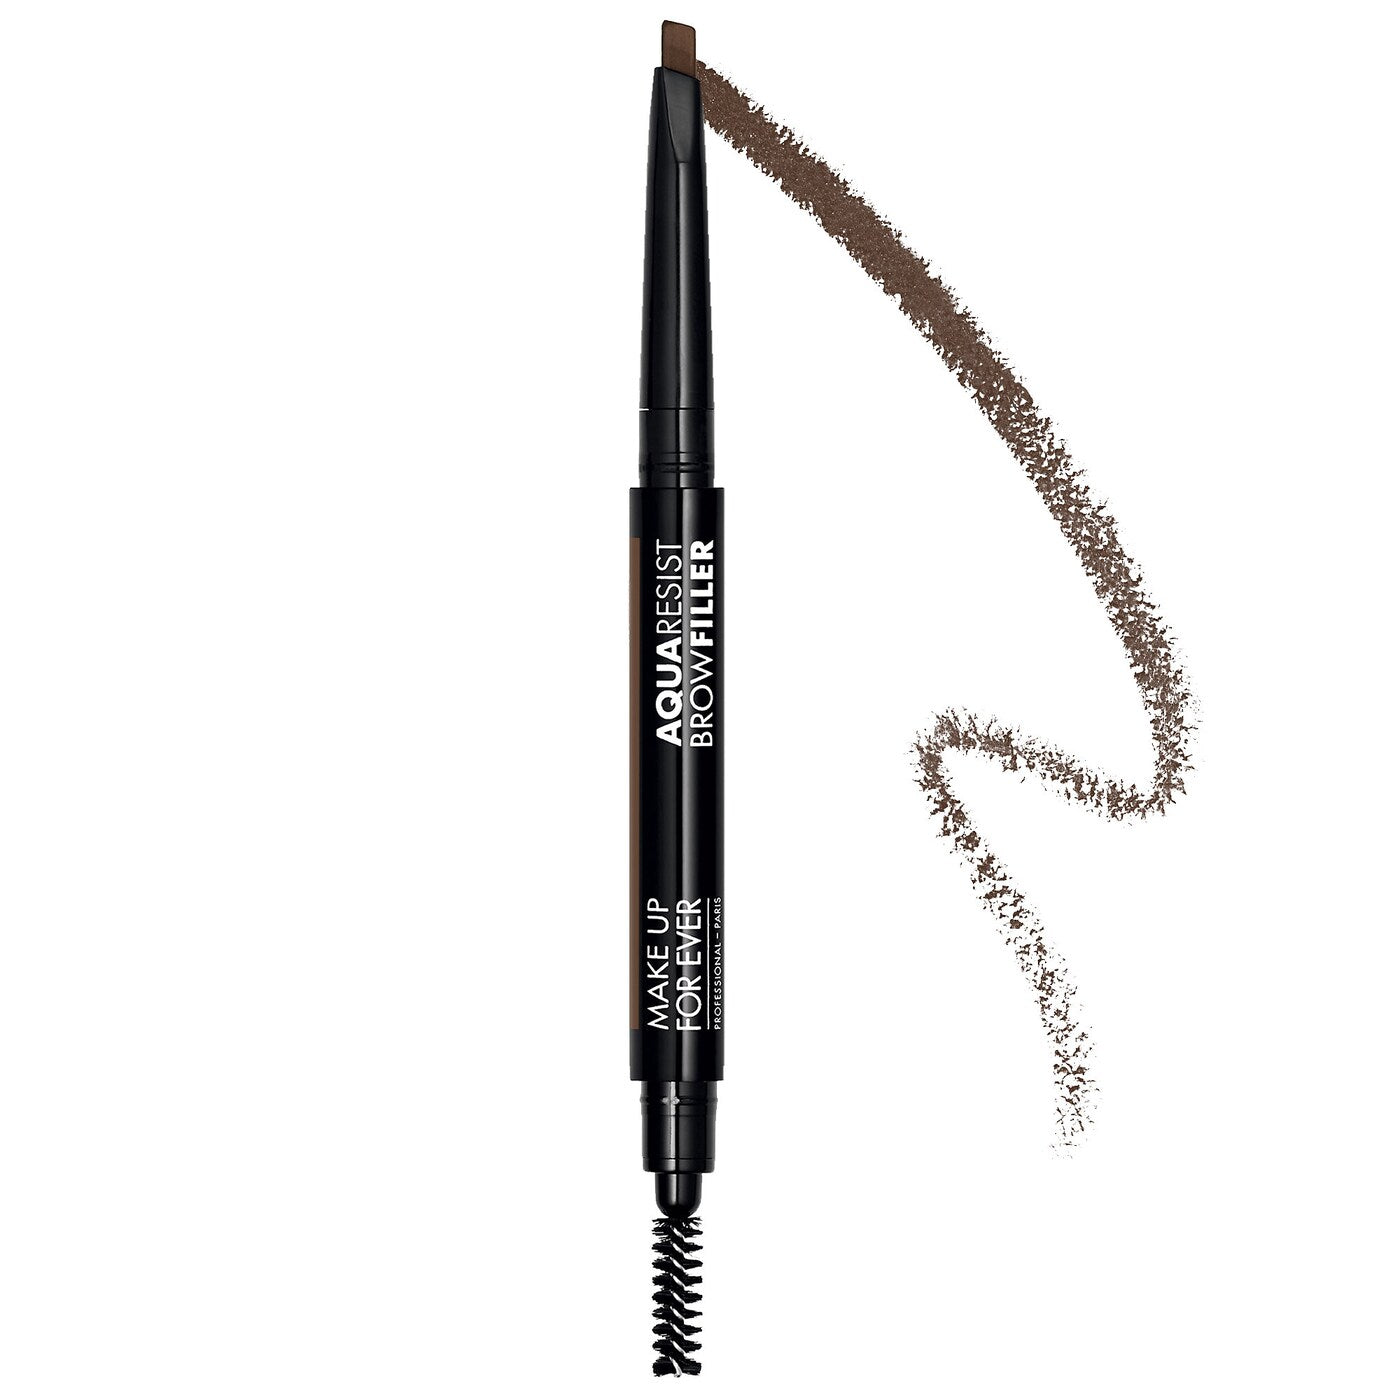 Waterproof Eyebrow Wax Pencils - Perpetual Permanent Makeup